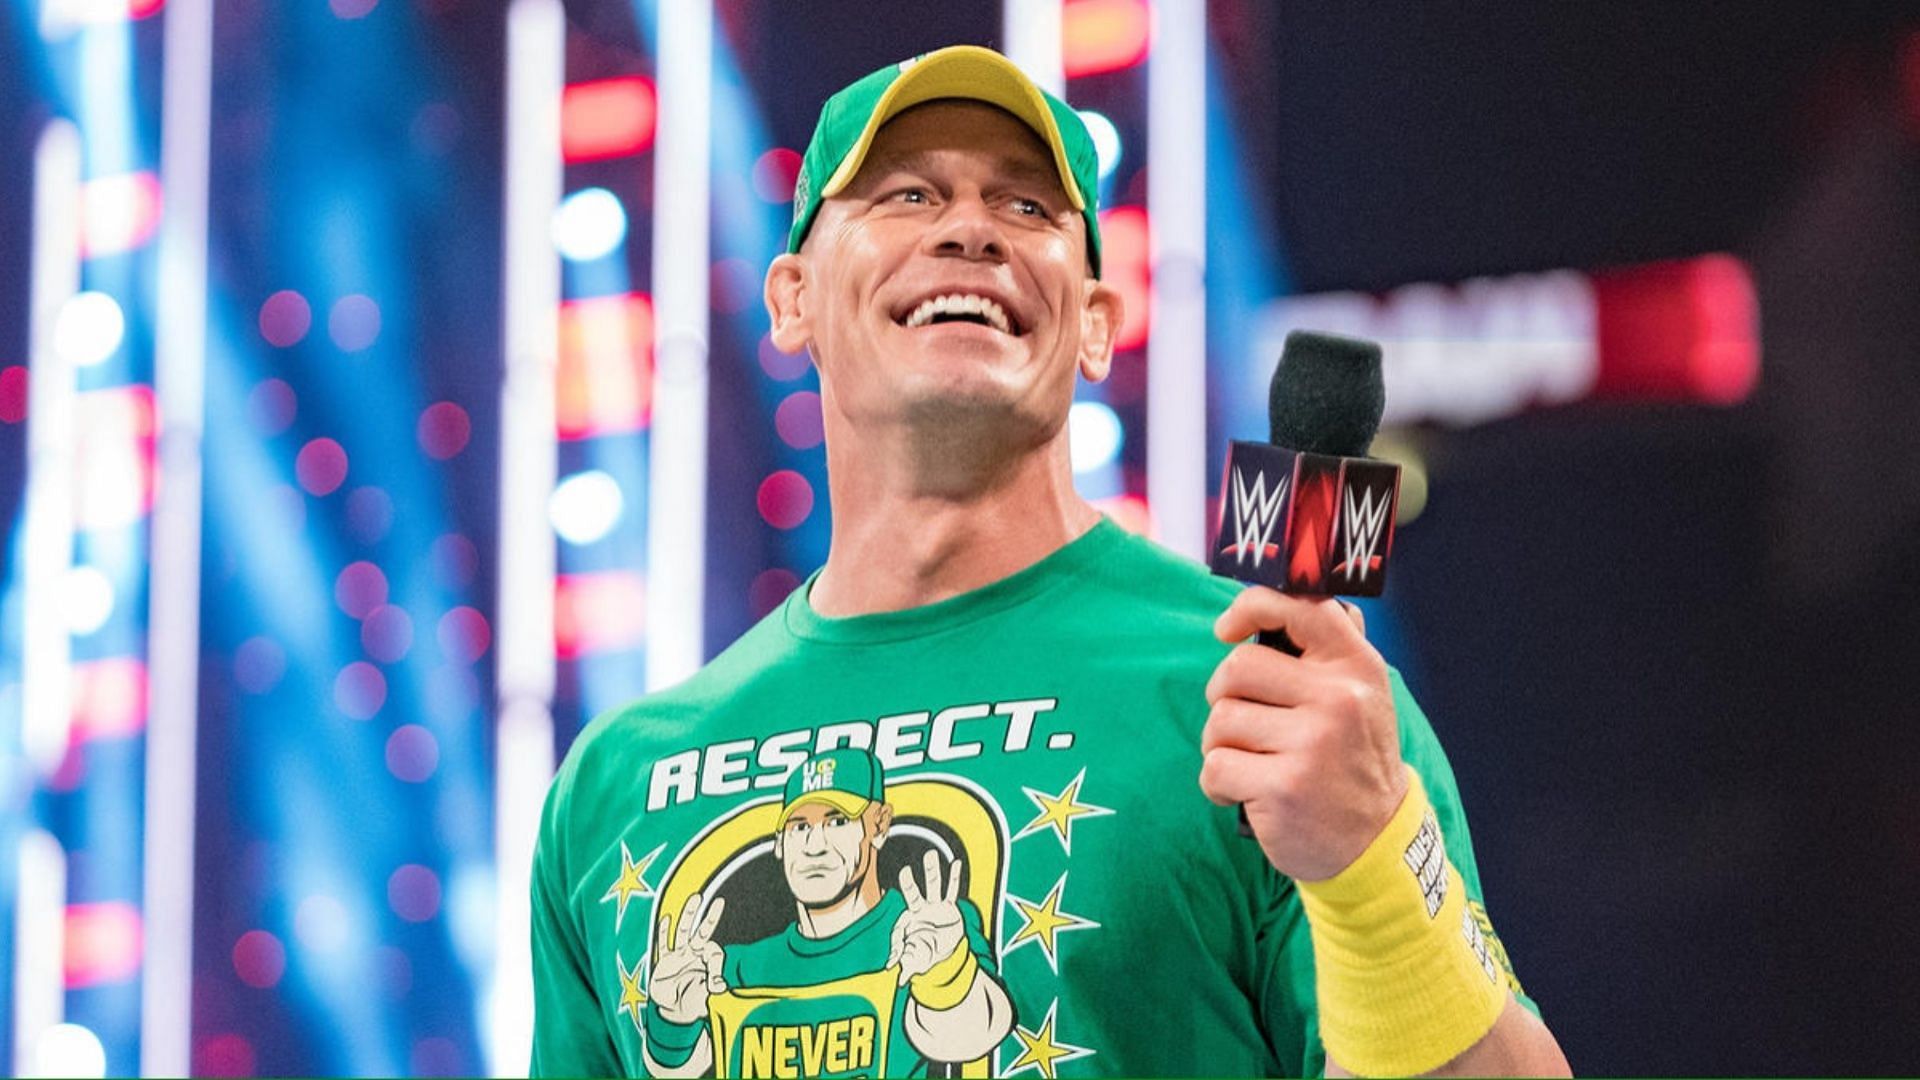 John Cena returned to WWE amid the SAG-AFTRA strike.